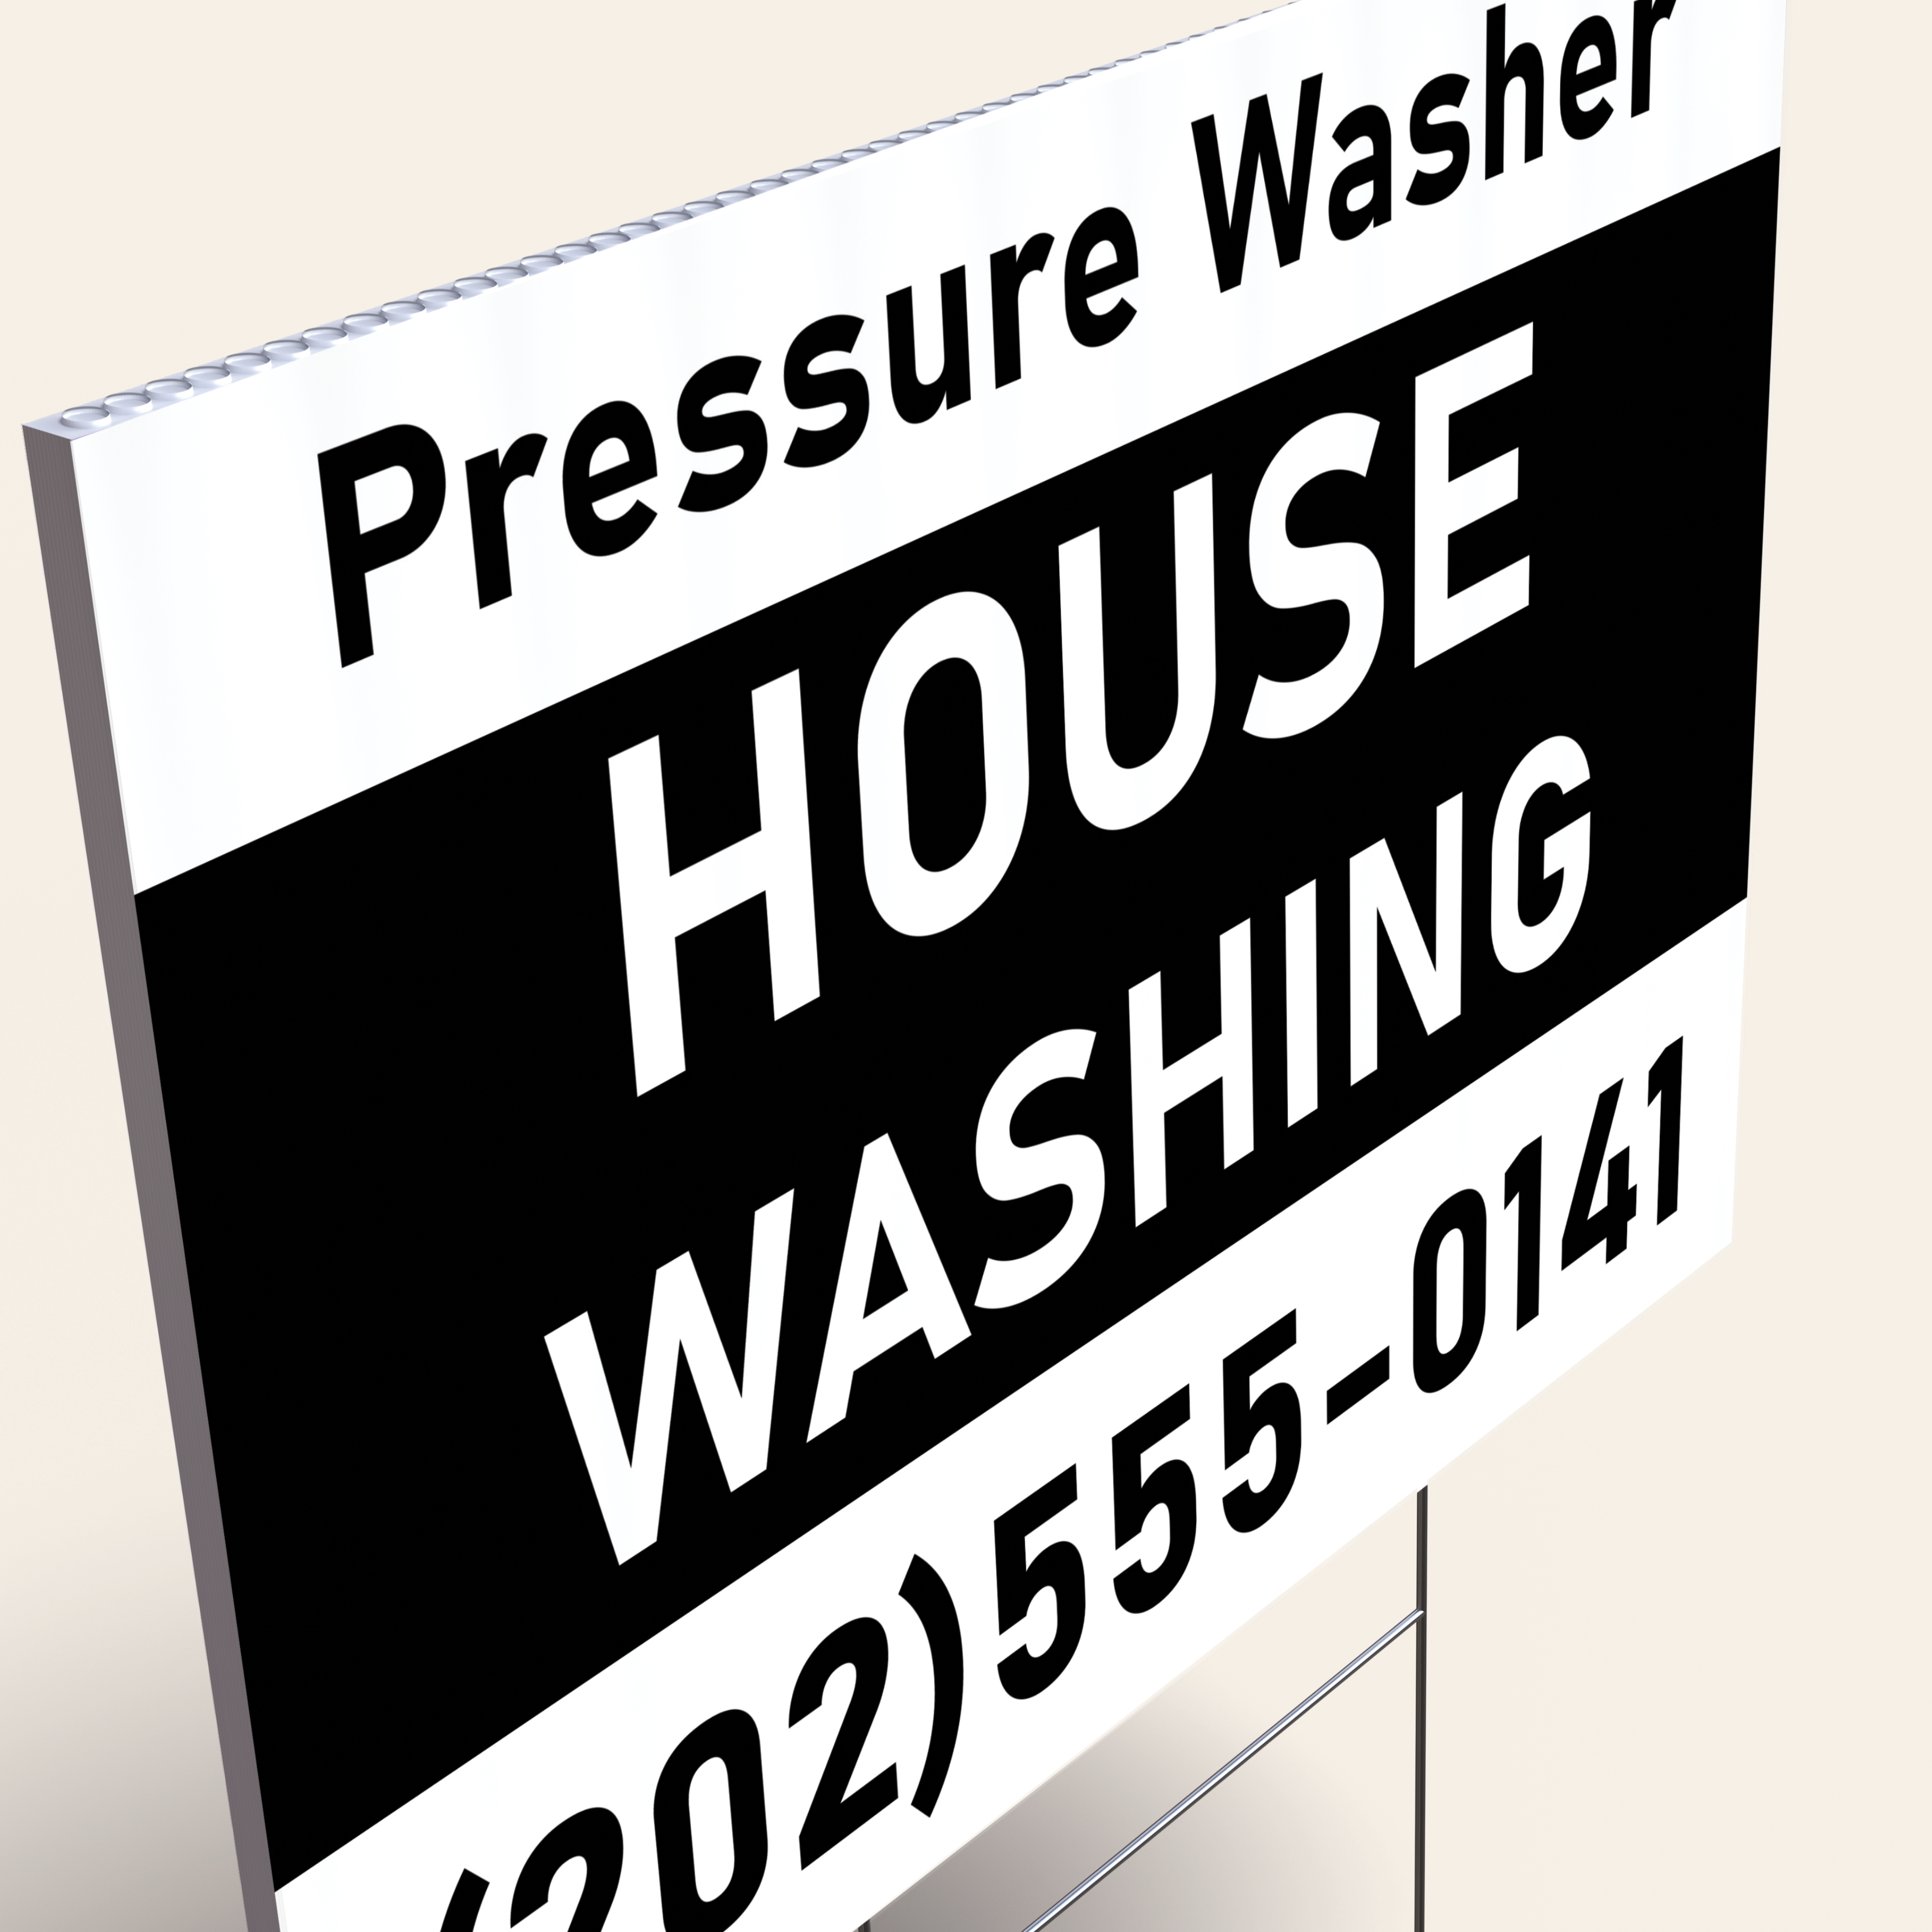 Pressure Washing Yard Signs